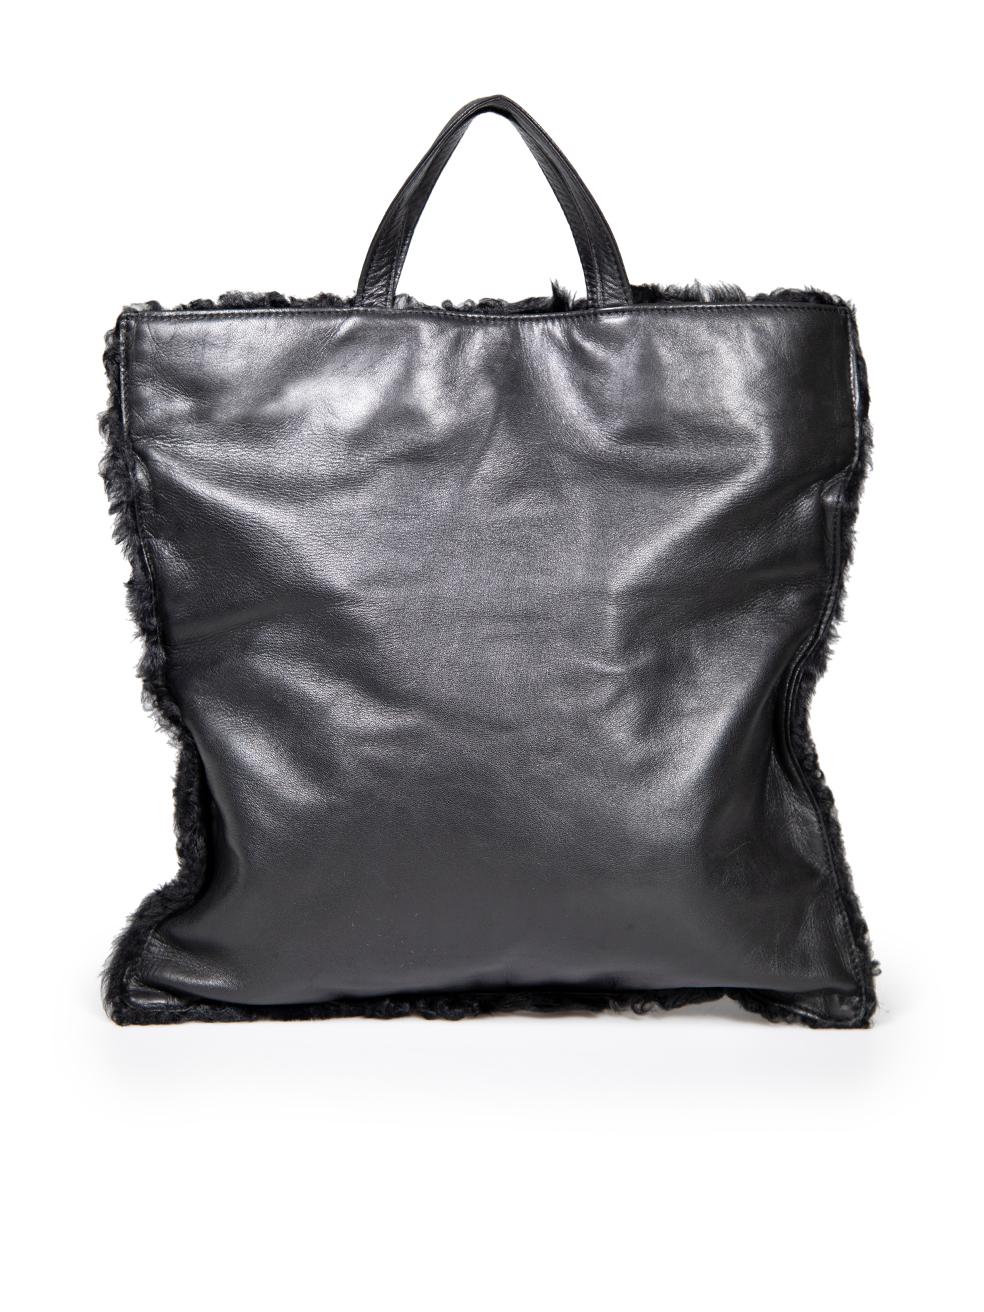 Loewe Black Fur Panel Tote Bag In Good Condition For Sale In London, GB